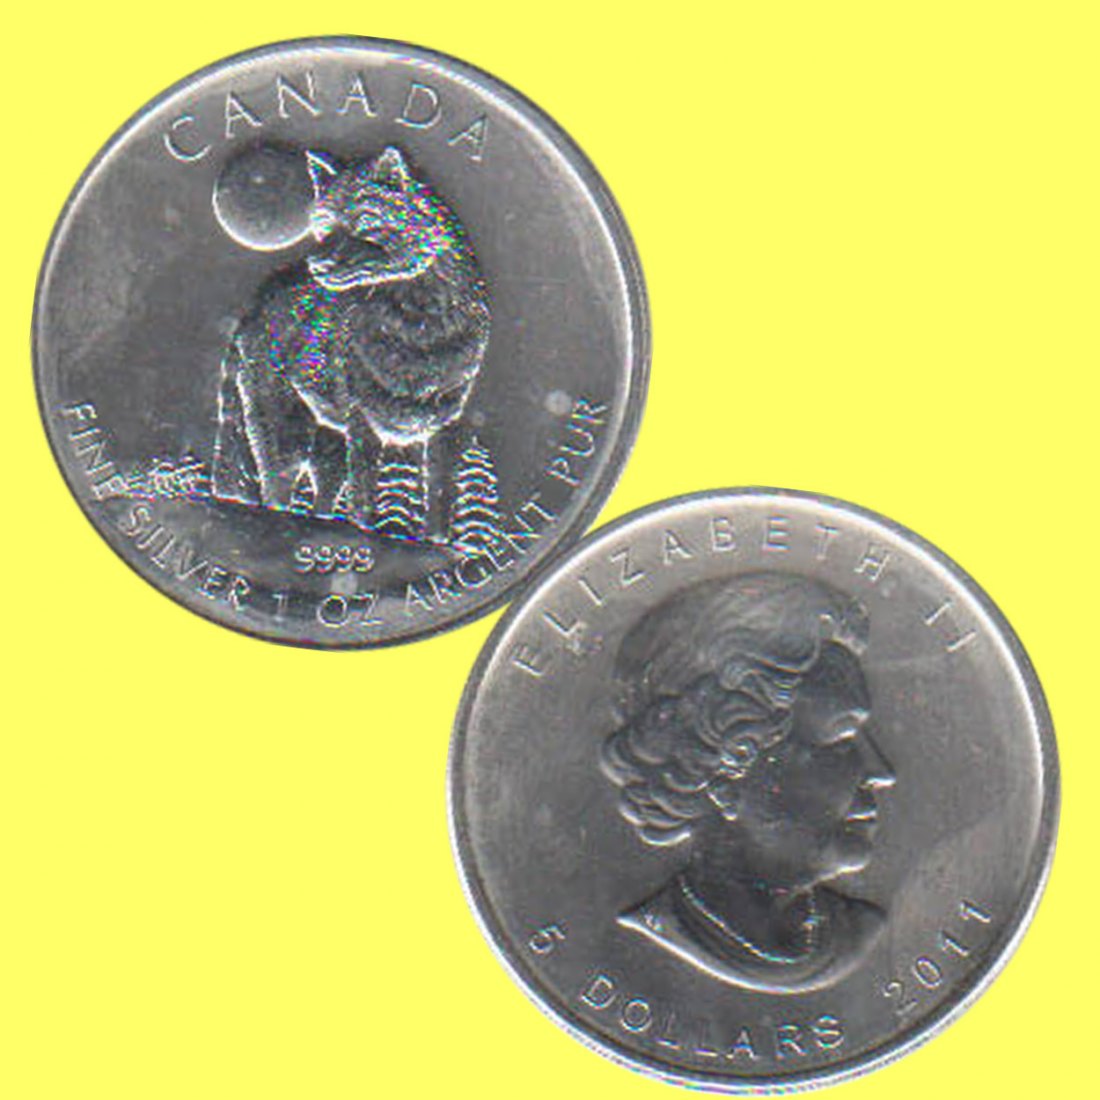  Kanada 5 Dollars Silbermünze *Wildlife - Timber Wolf* 2011 1oz Silber   